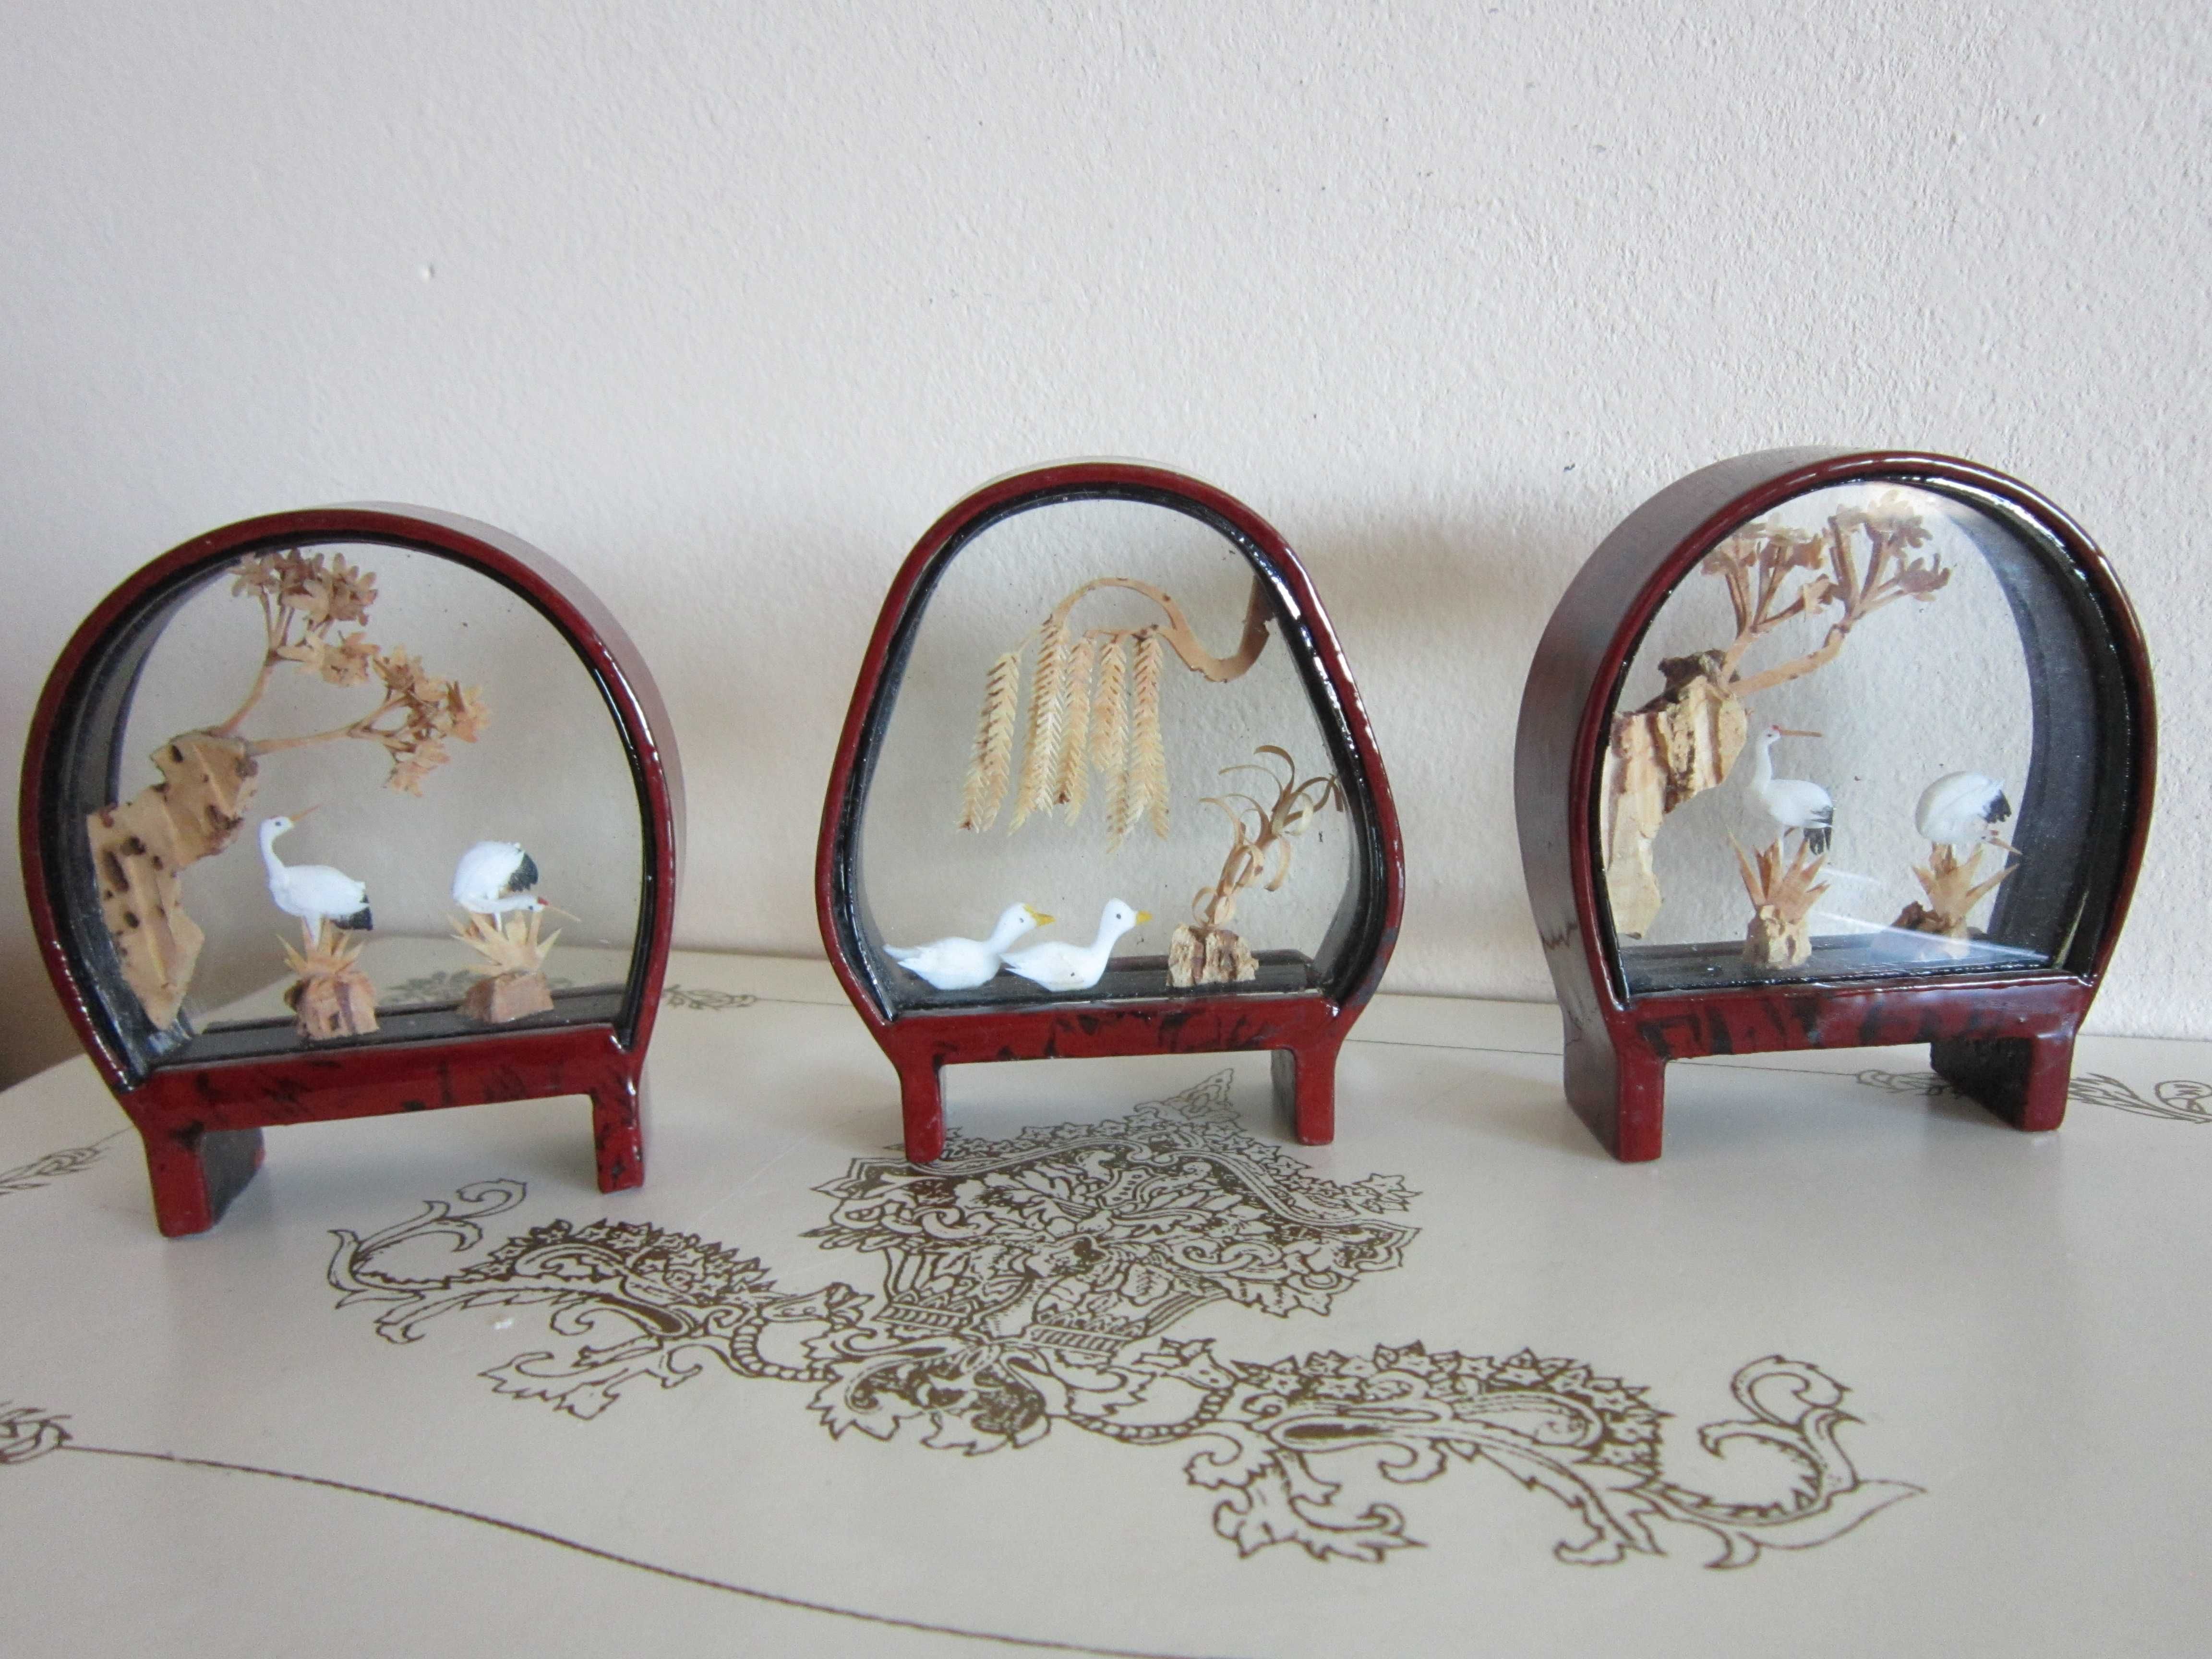 cadou rar Diorama miniaturi vintage colectie fabricata China anii '60